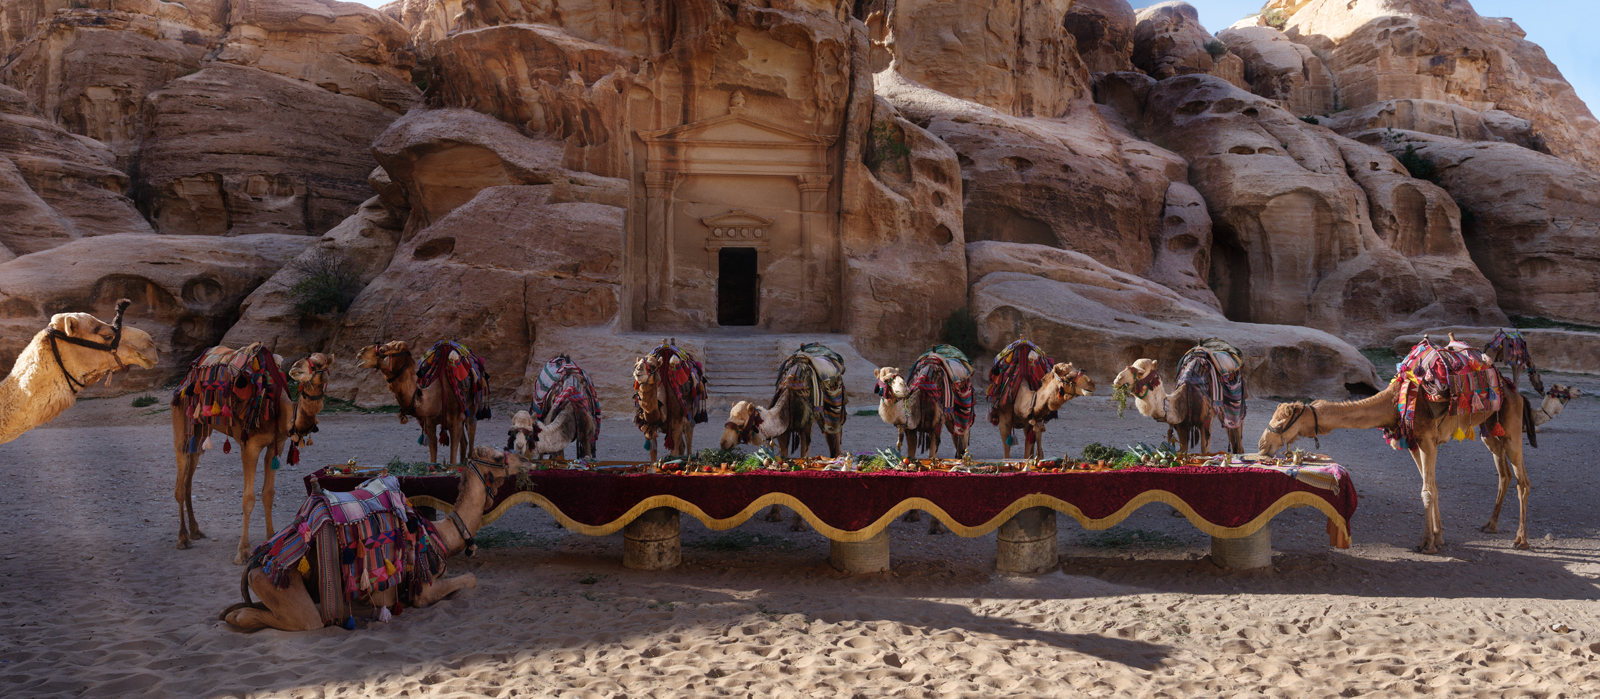  The Camel Feast  Jordan, 2018  10”x23” | 20”x46” | 40”x92” 